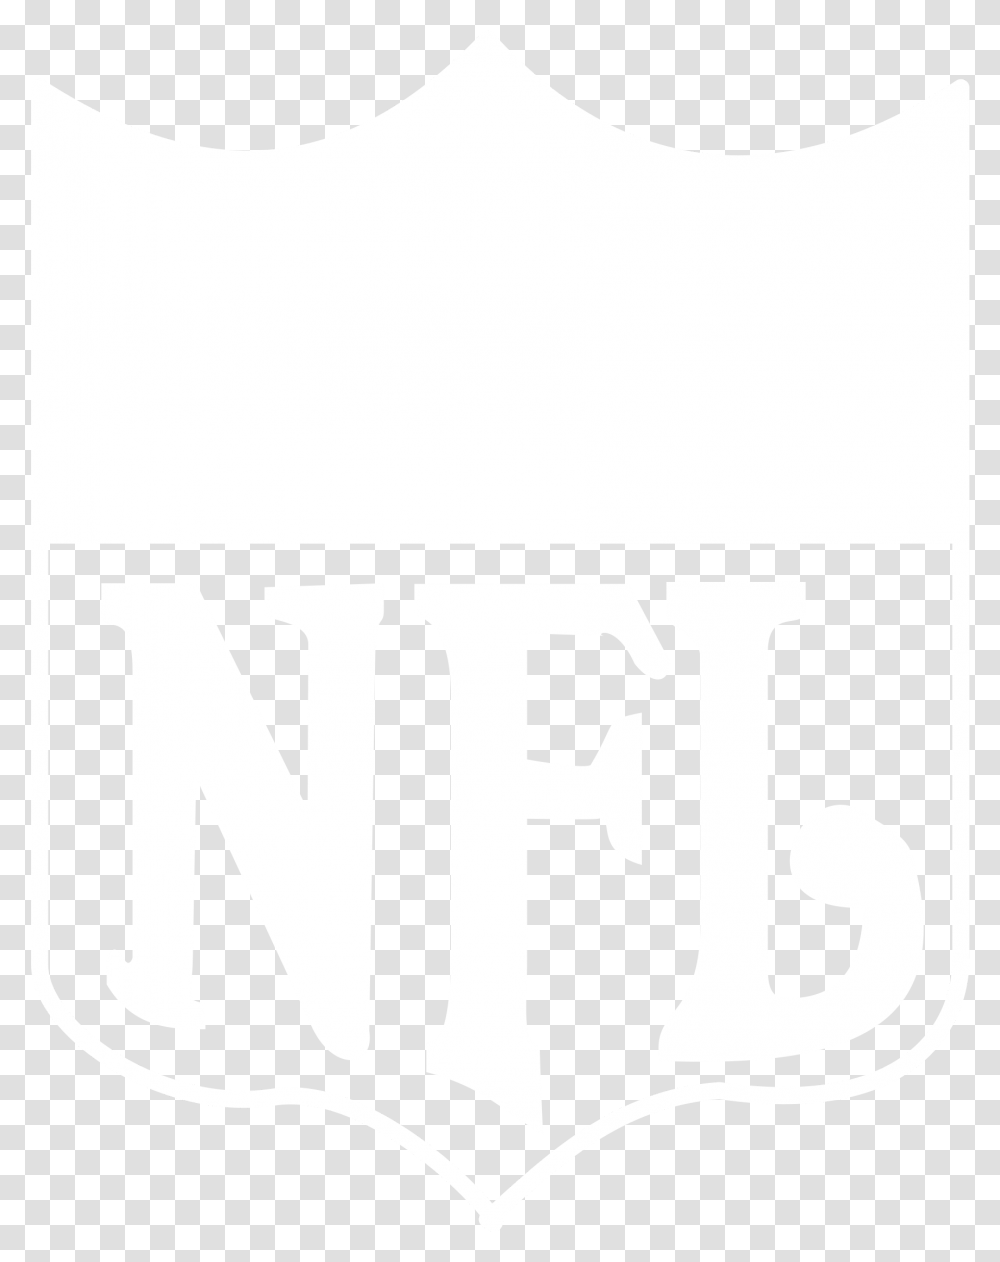 Nfl Logo Black And White Crowne Plaza Logo White, Label, Number Transparent Png